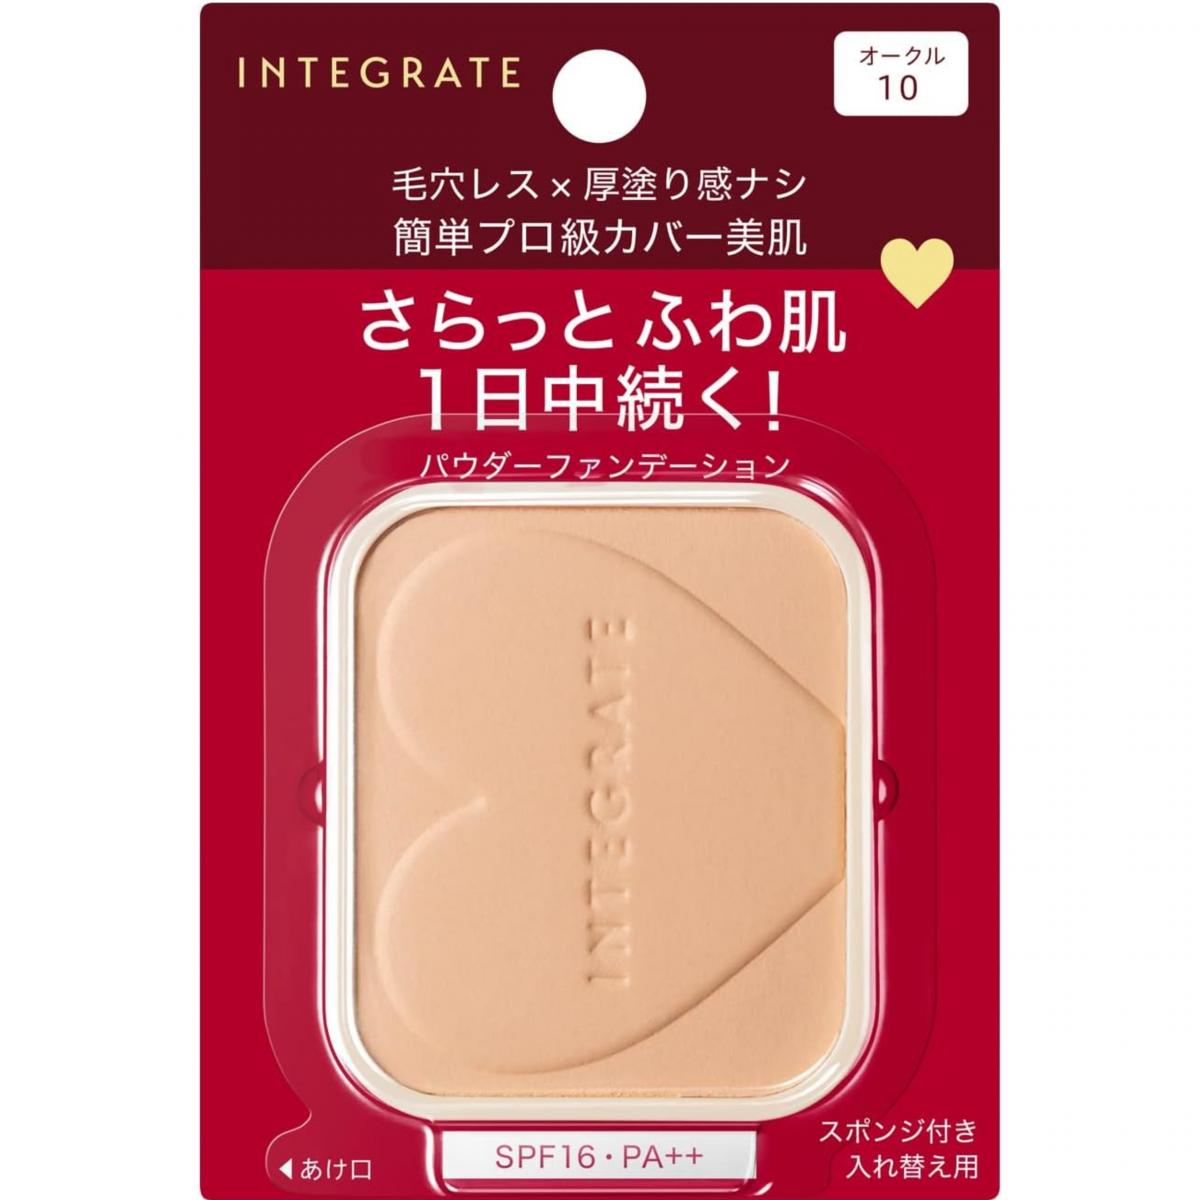 Shiseido Integrate 完美意境柔焦輕透美肌粉芯 SPF16/PA++10g OC-10 明亮膚色 - 55494(平行進口)